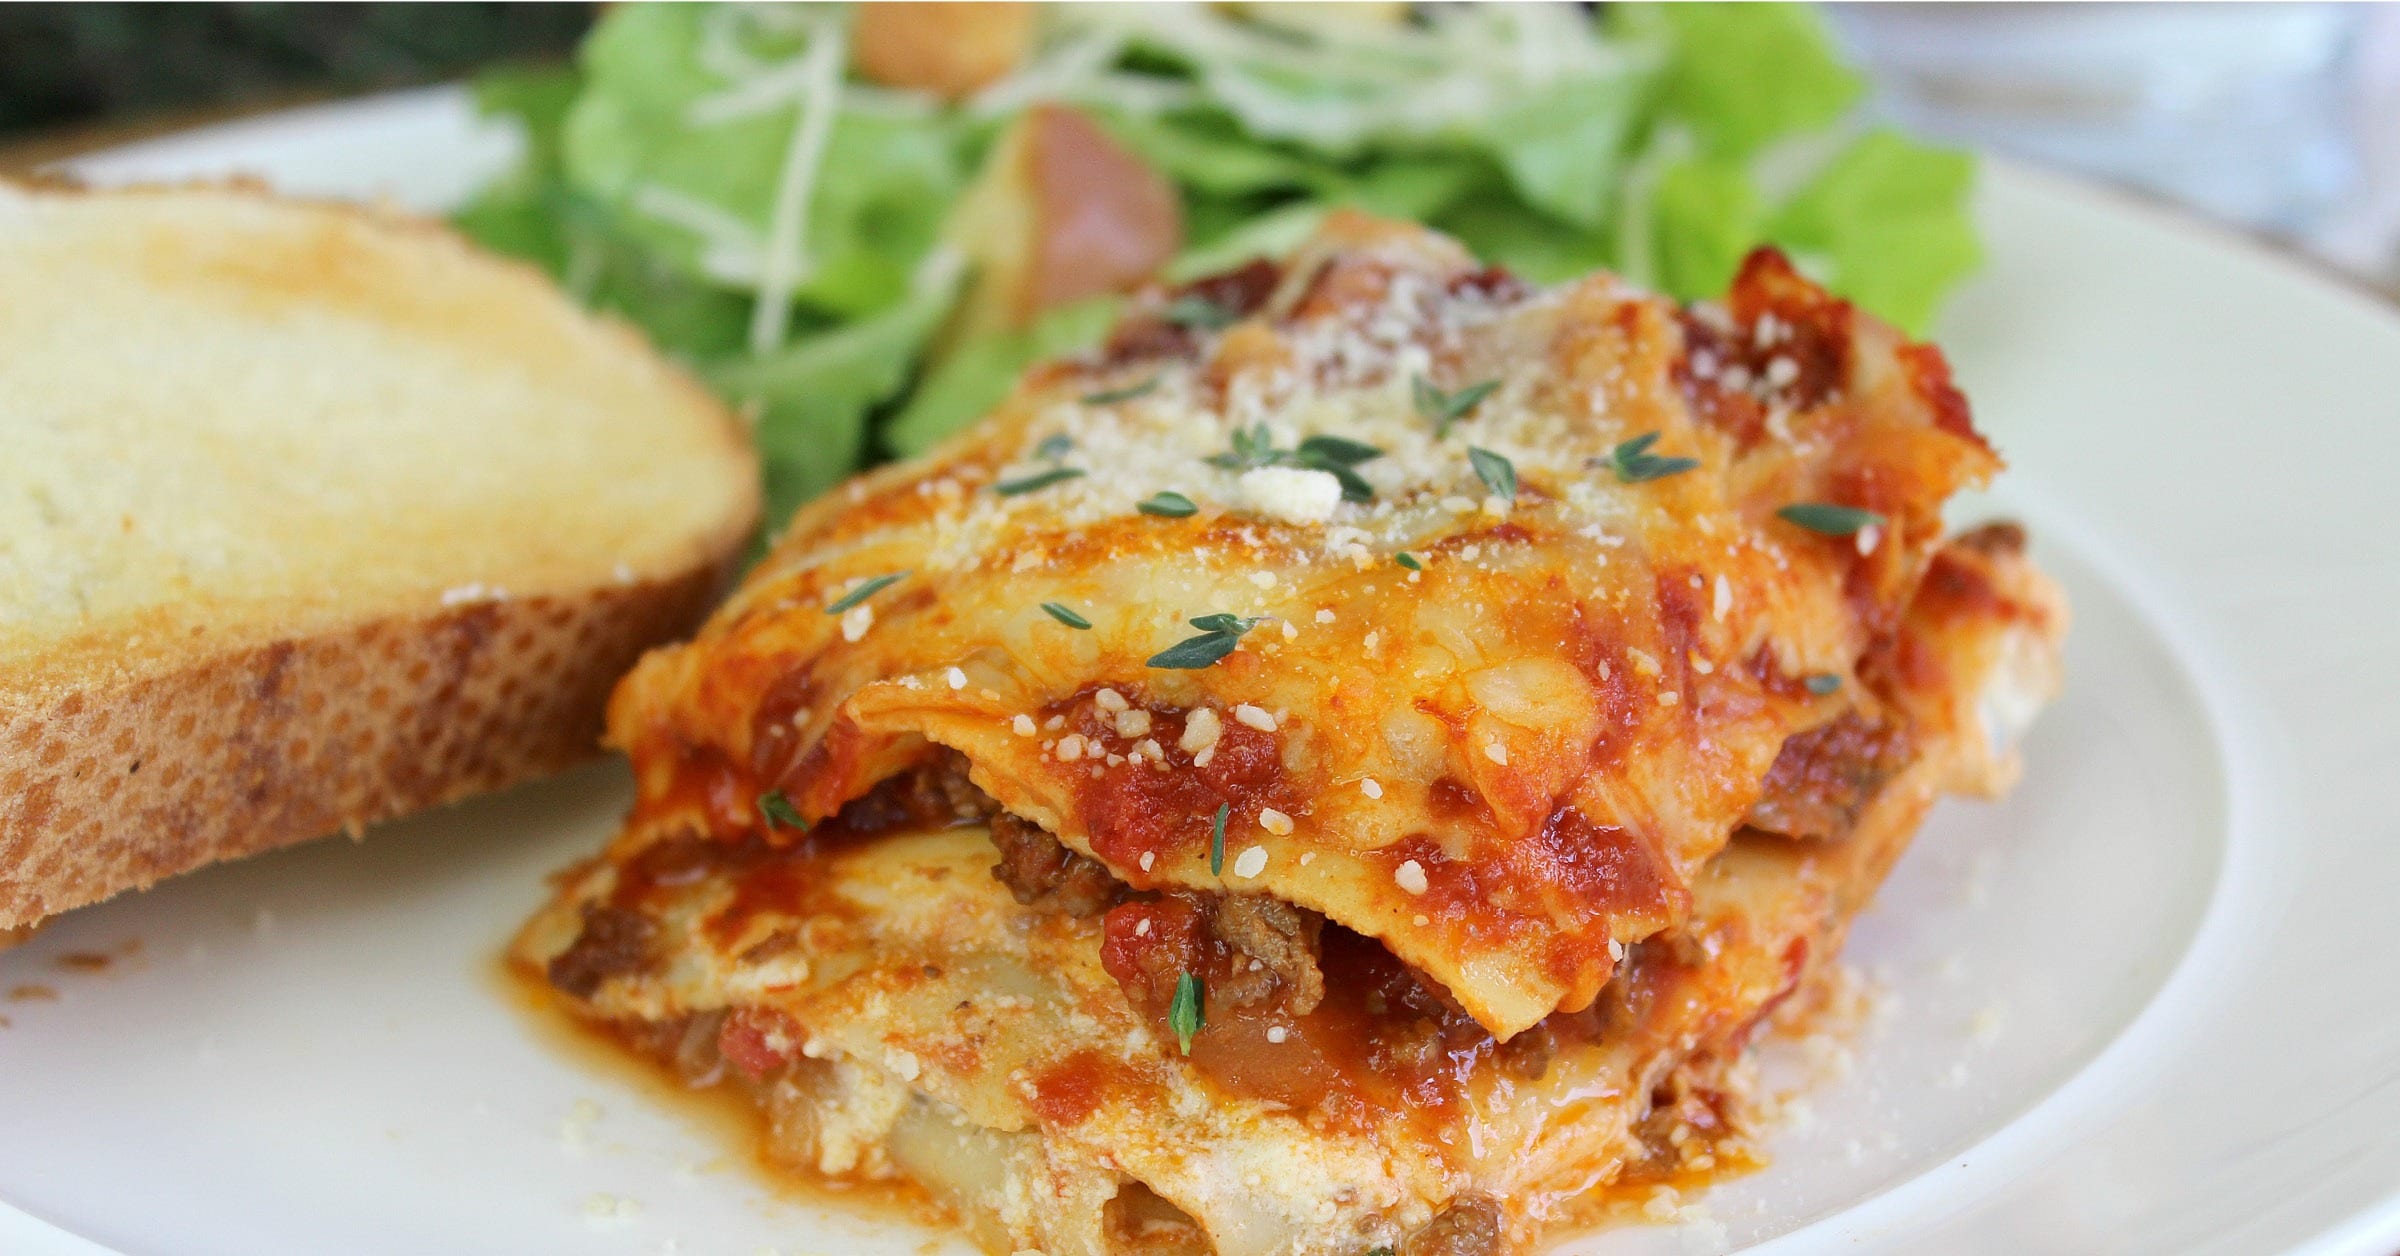 15 Great Vegan Lasagna Recipes – Easy Recipes To Make at Home